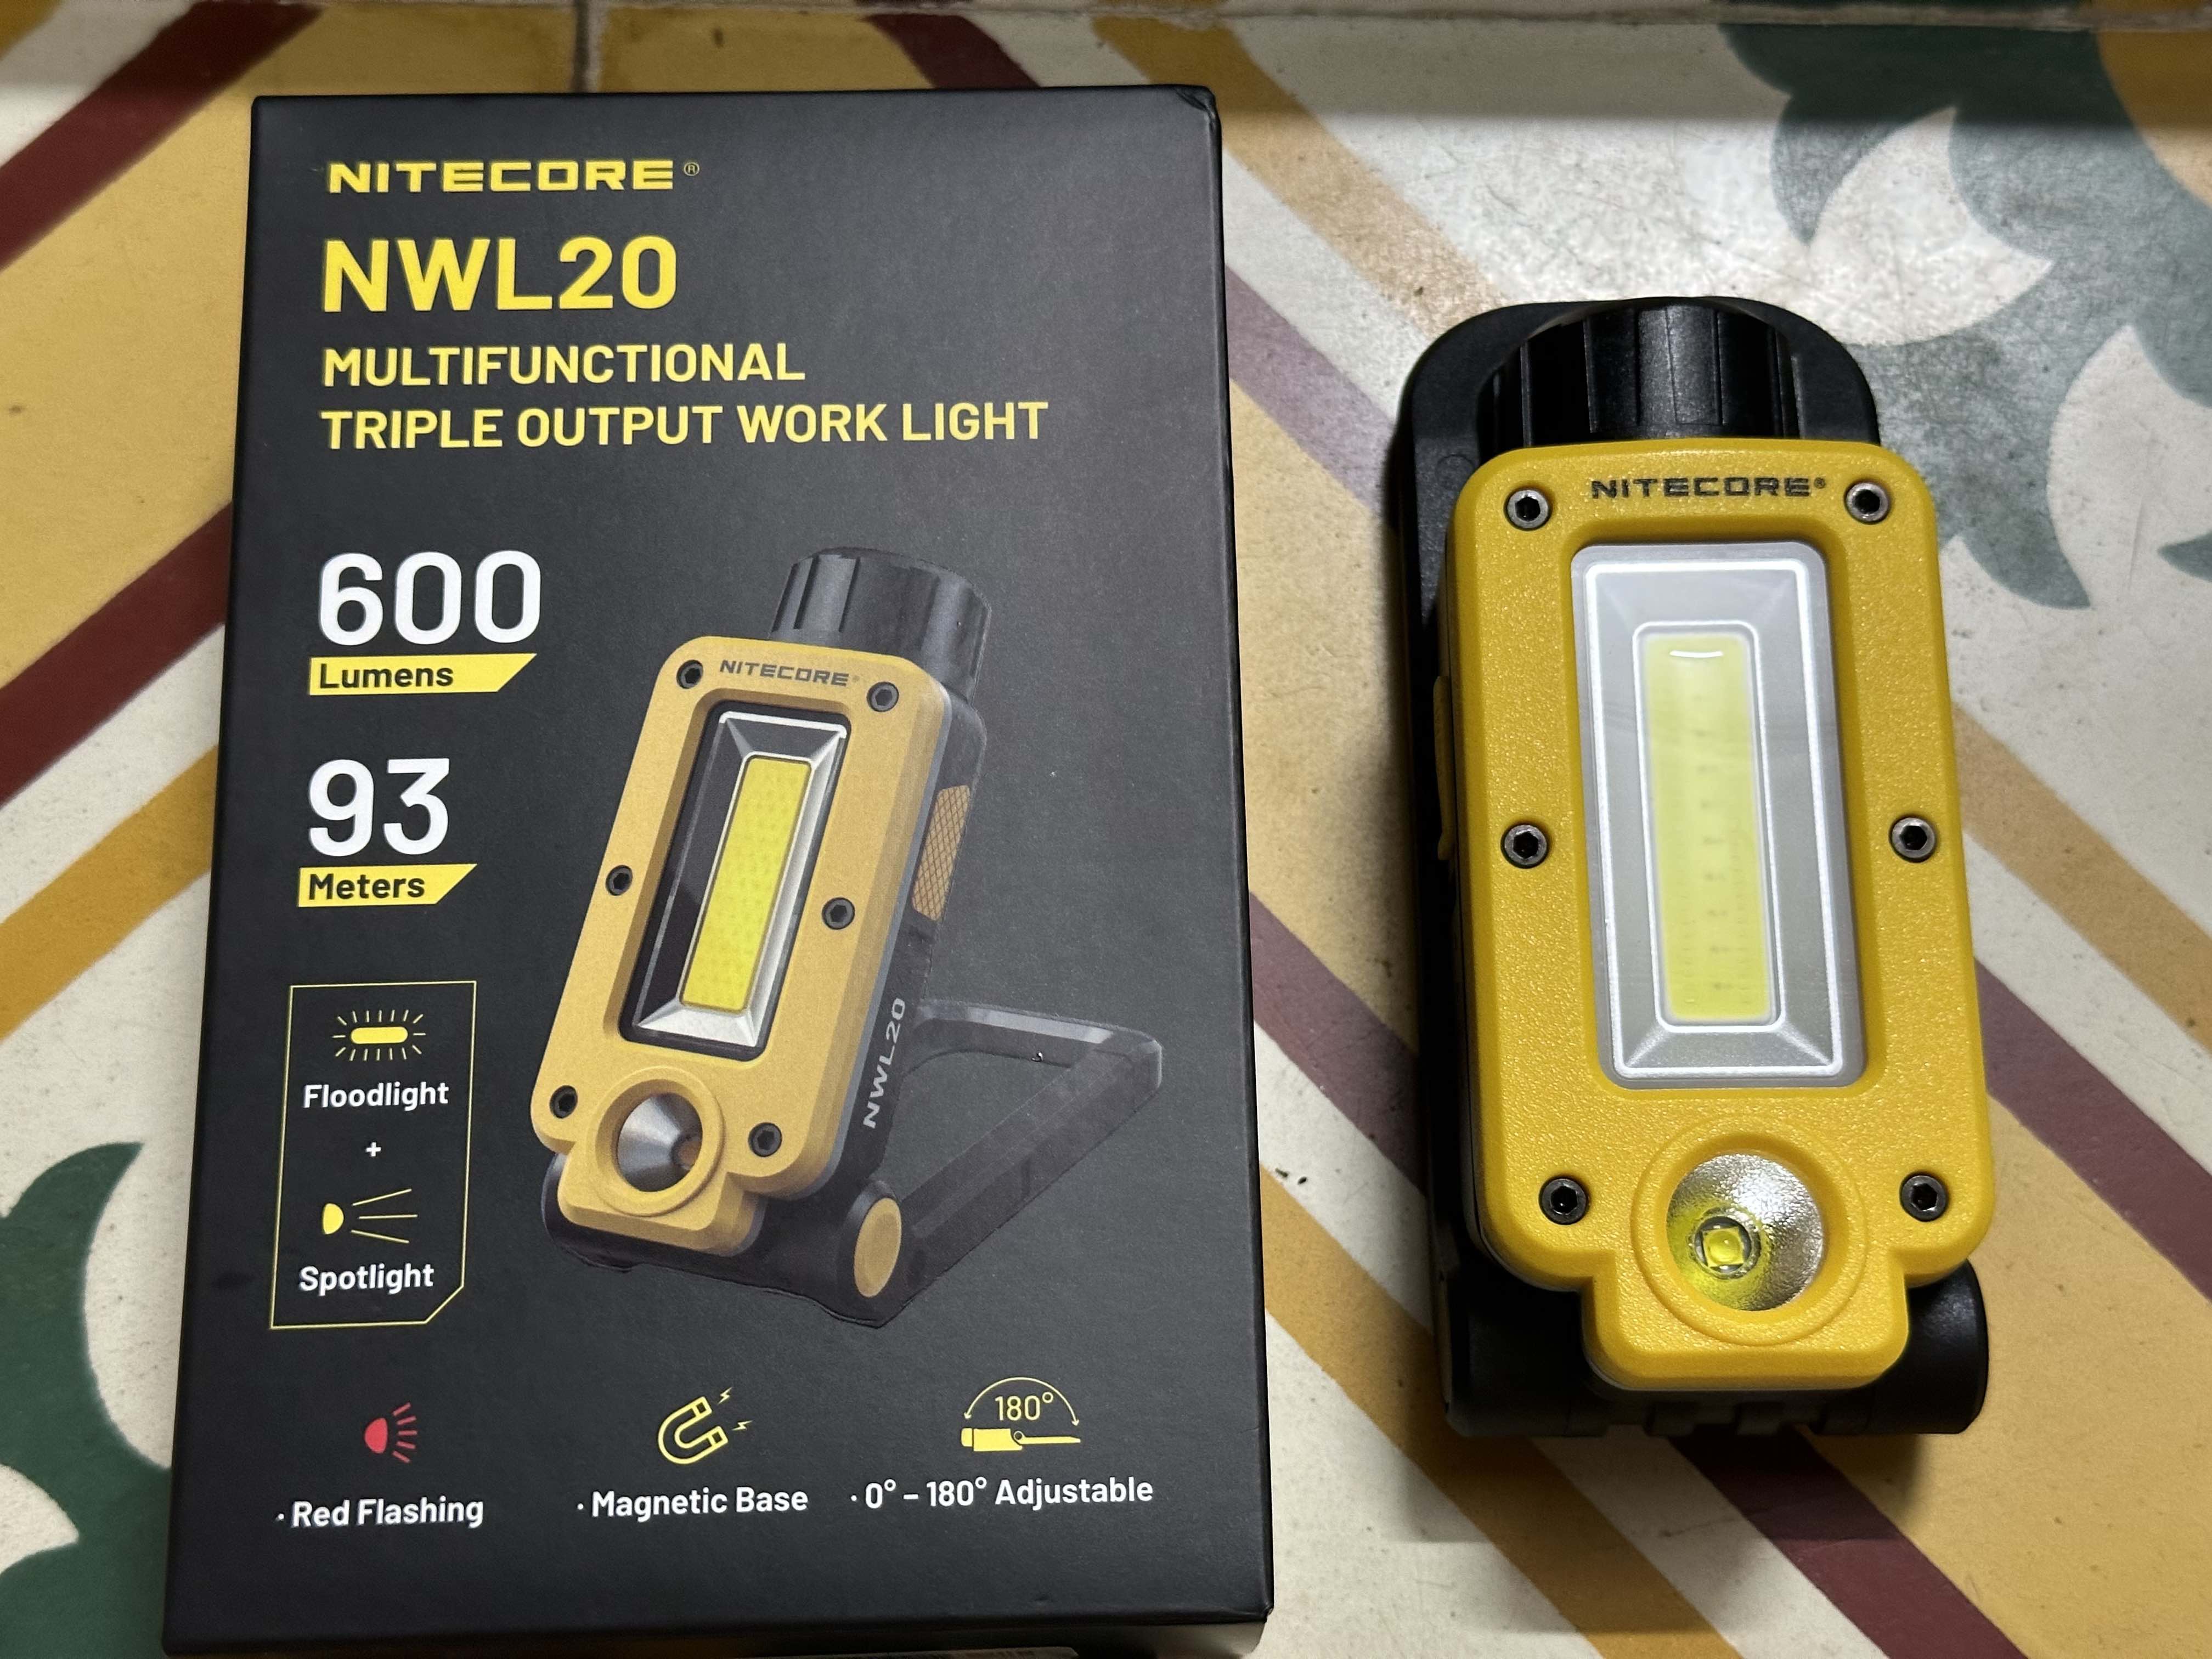 Nitecore NWL20 Multifunctional Triple Output Work Light